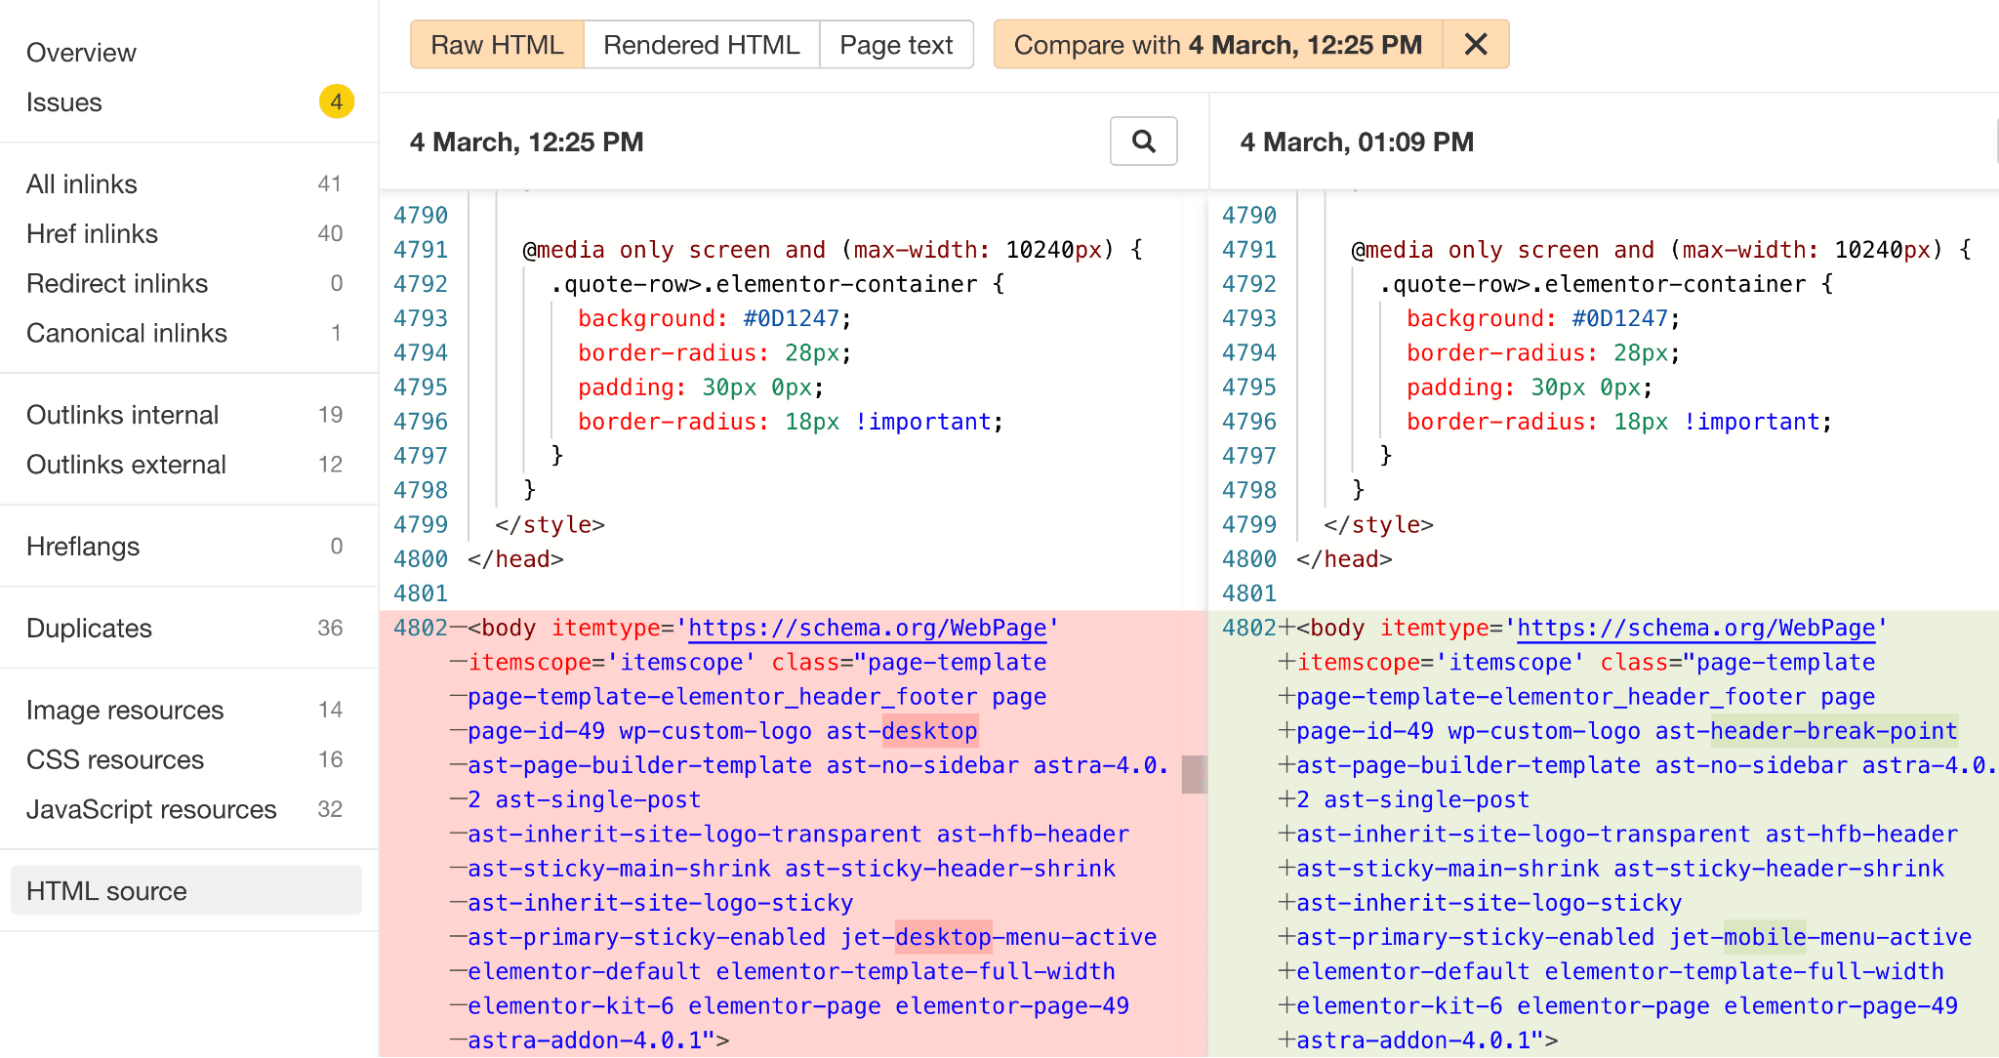 Comparing HTML source code, via Ahrefs' Site Audit crawl comparisons
